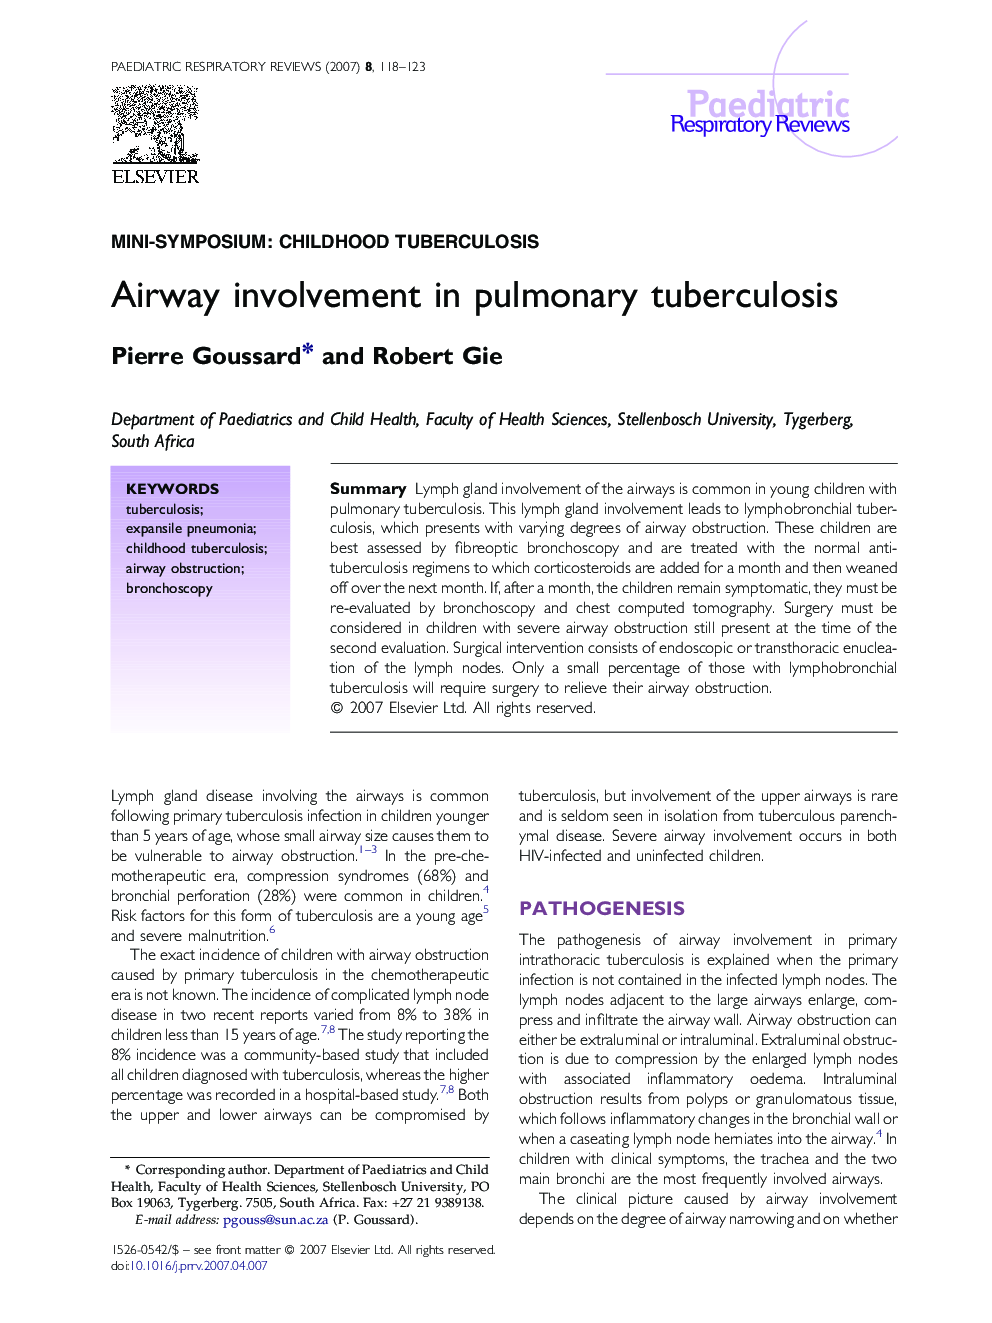 Airway involvement in pulmonary tuberculosis